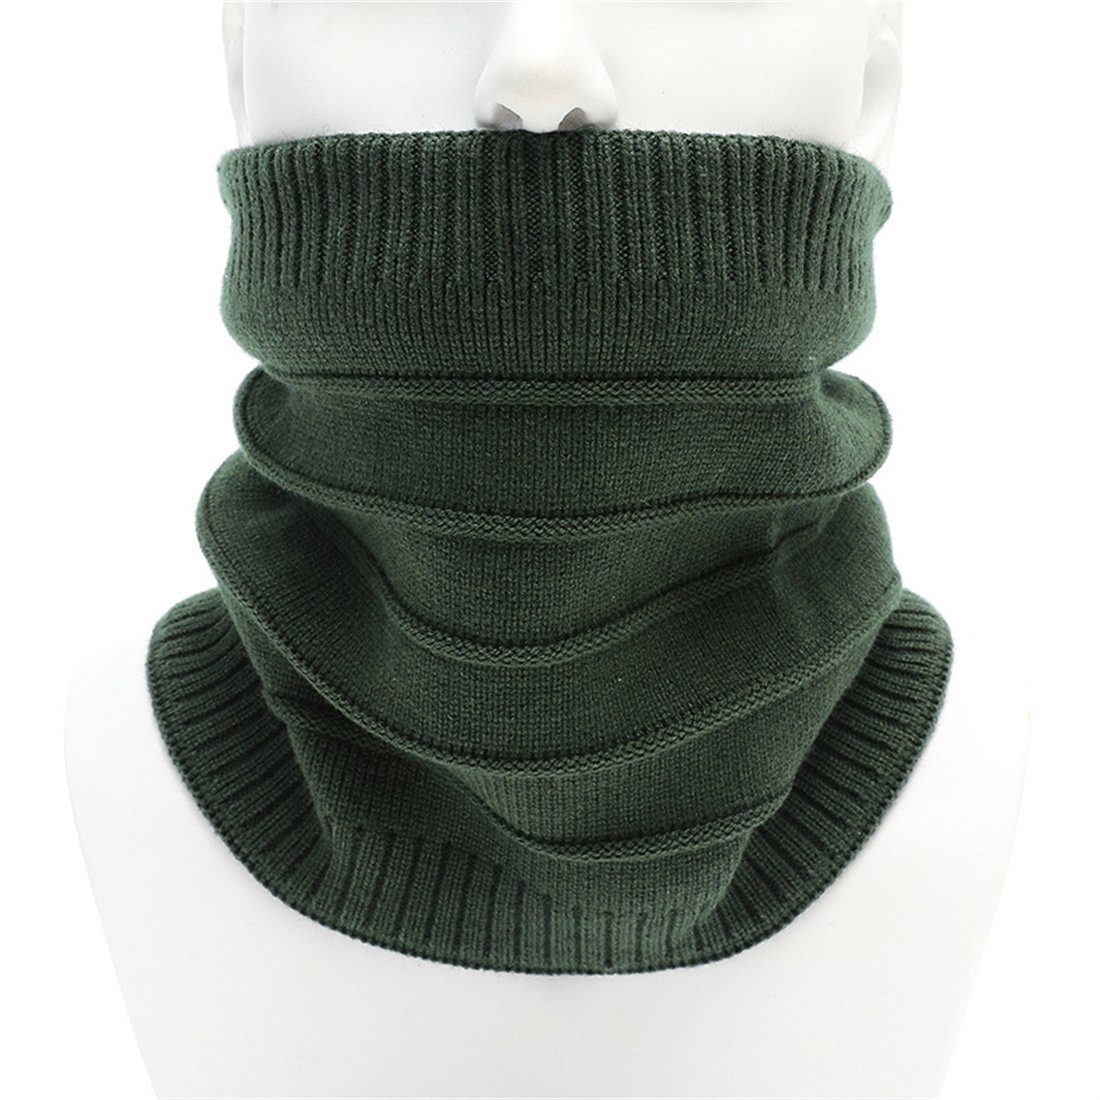 DÖRÖY Modeschal Unisex einfarbiger warmer gestreifter Schal, gestrickte Halsbedeckung grün